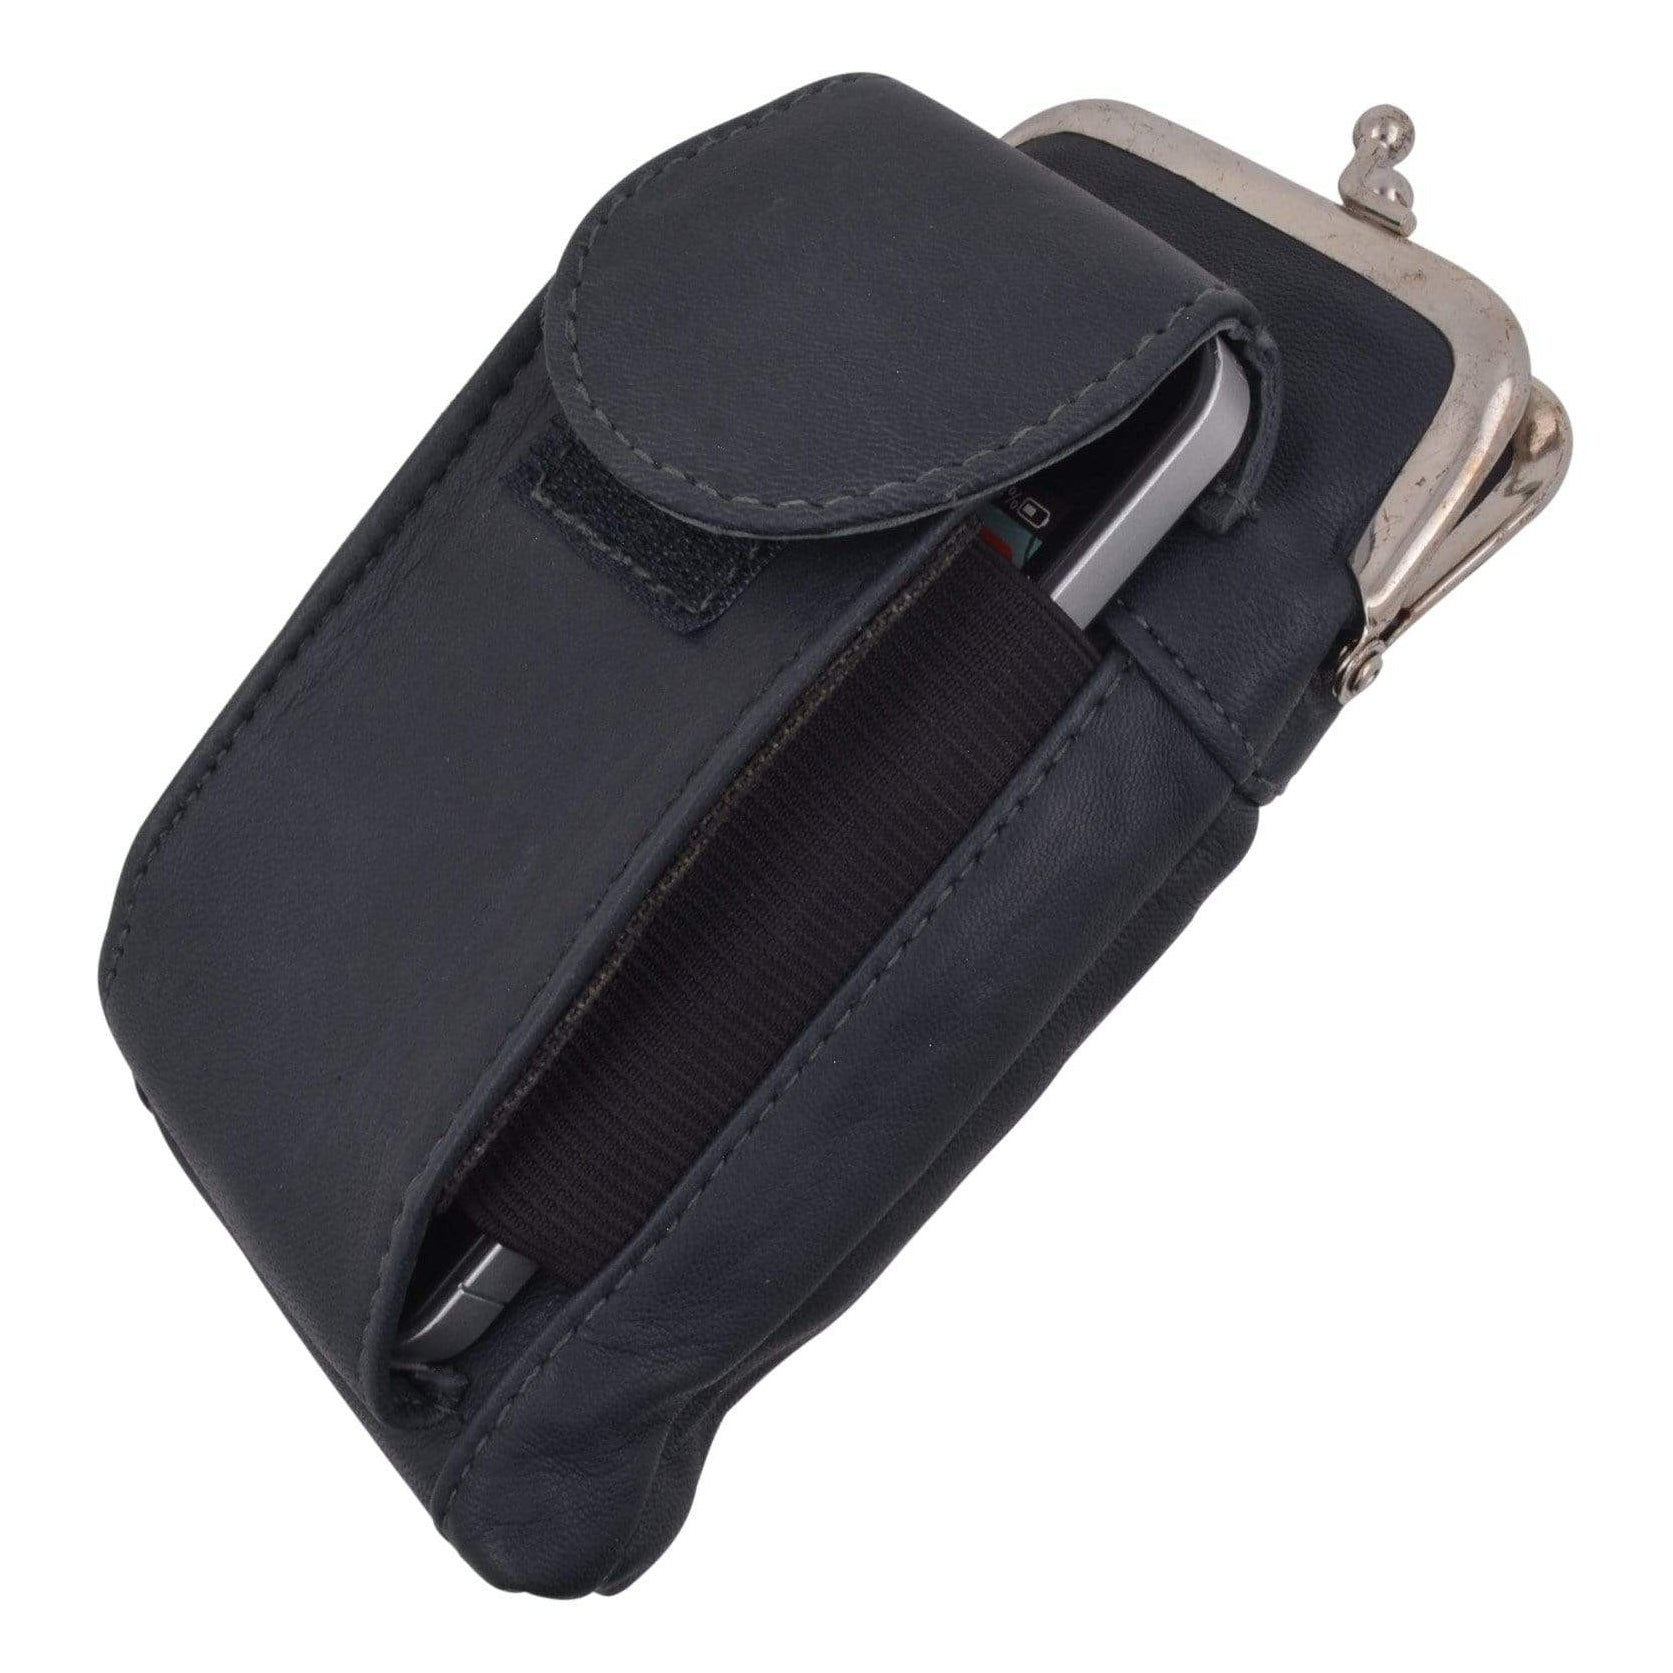 Leather Cigarette (C) Holder with Cellphone 1842 Pocket